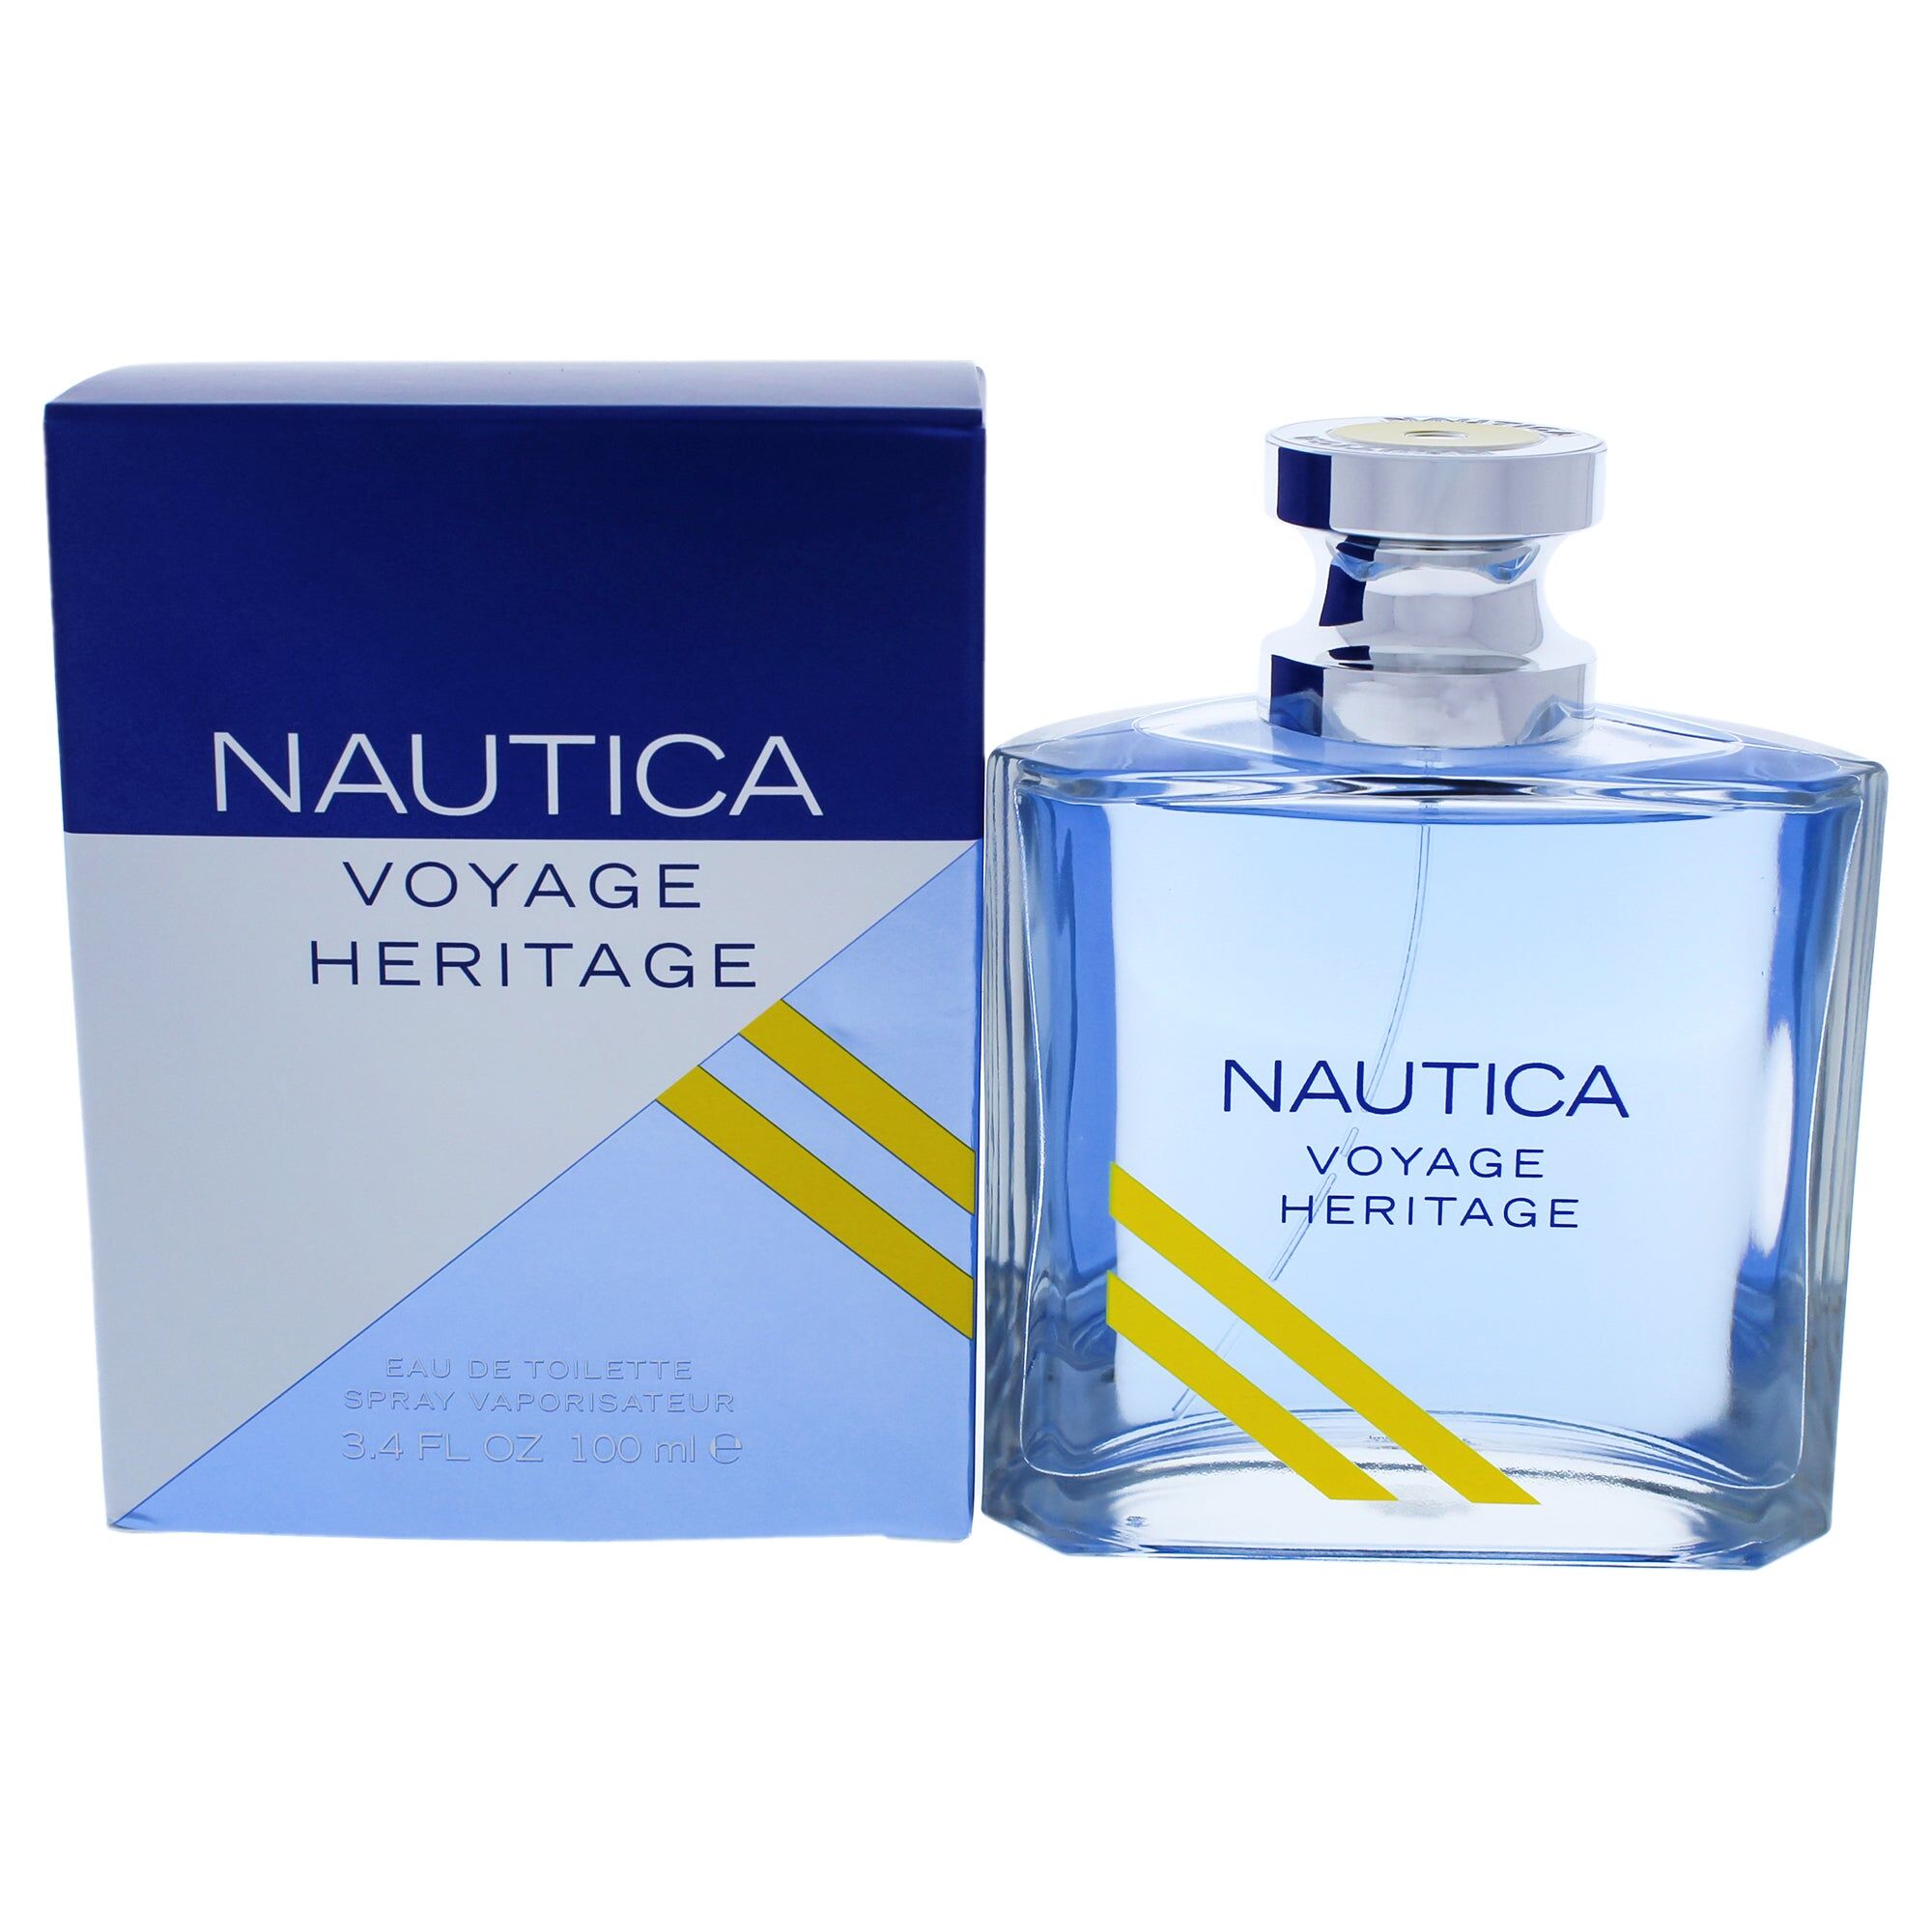 Nautica Voyage Heritage by Nautica for Men - 3.4 oz EDT Spray 3.4 oz male